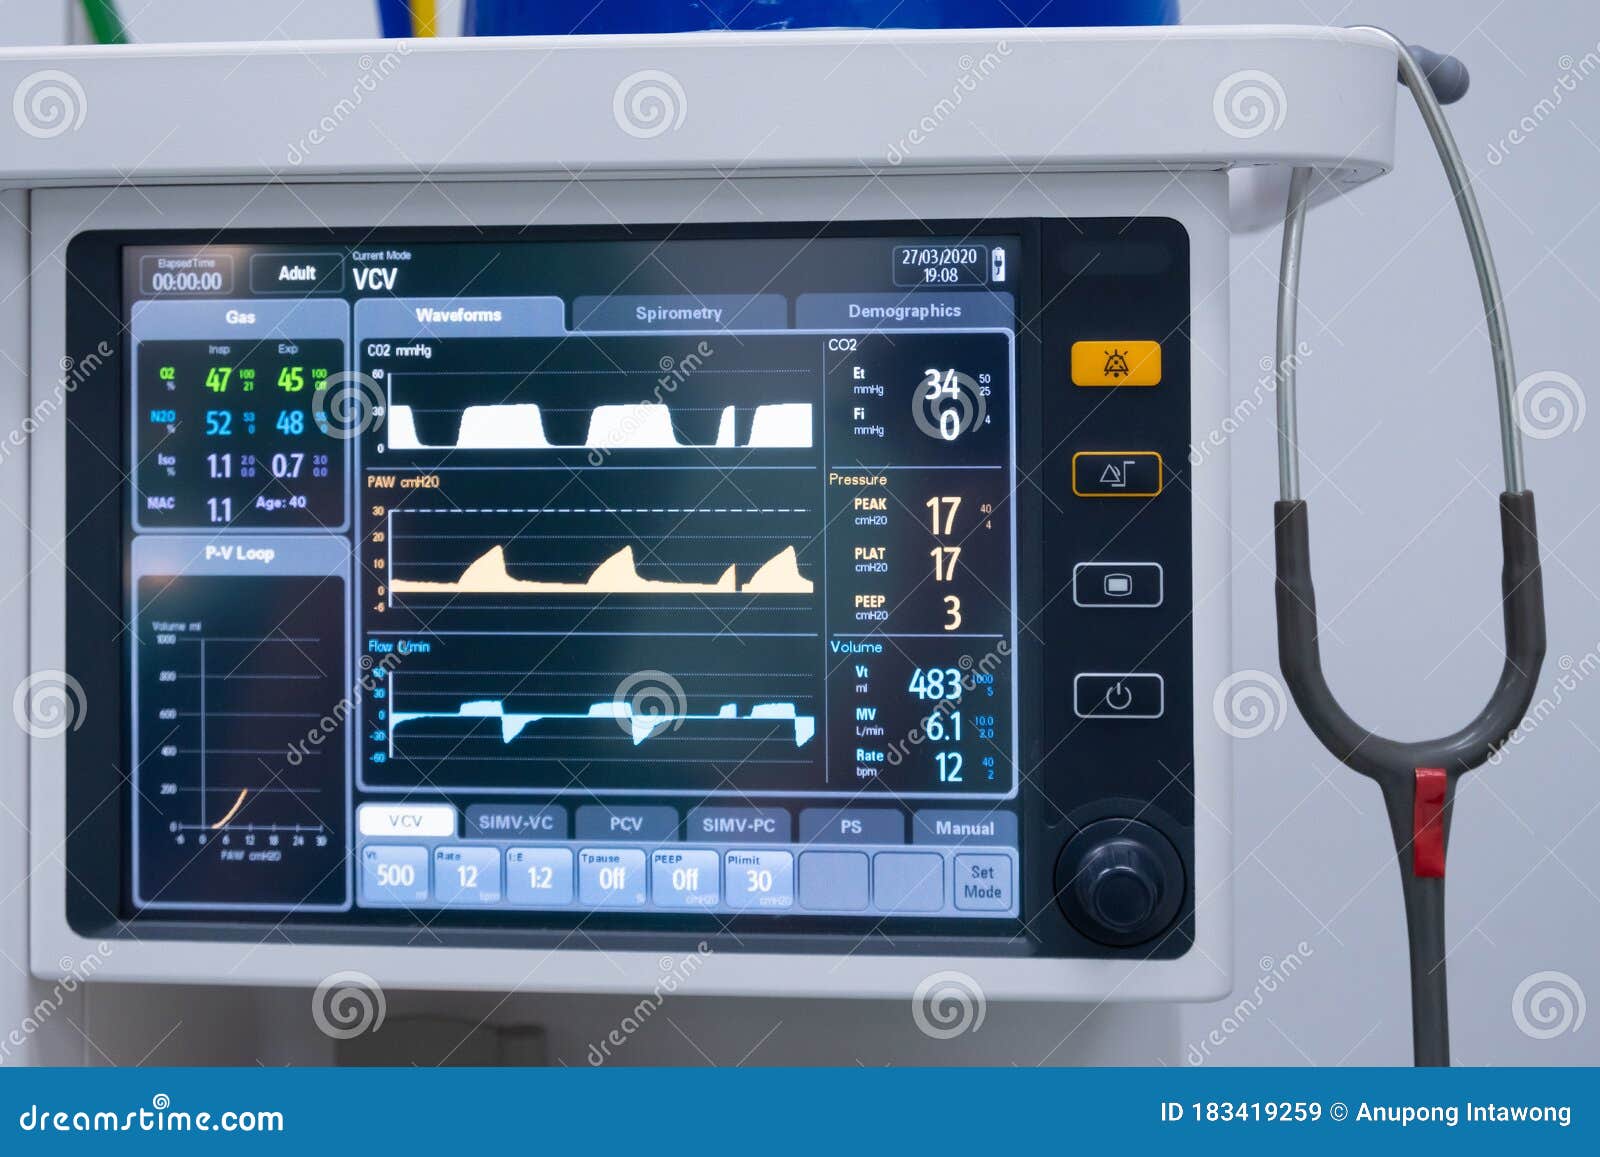 https://thumbs.dreamstime.com/z/vital-signs-monitor-using-measure-pulse-oximetry-non-invasive-blood-pressure-temperature-etco-respiration-etc-vital-183419259.jpg